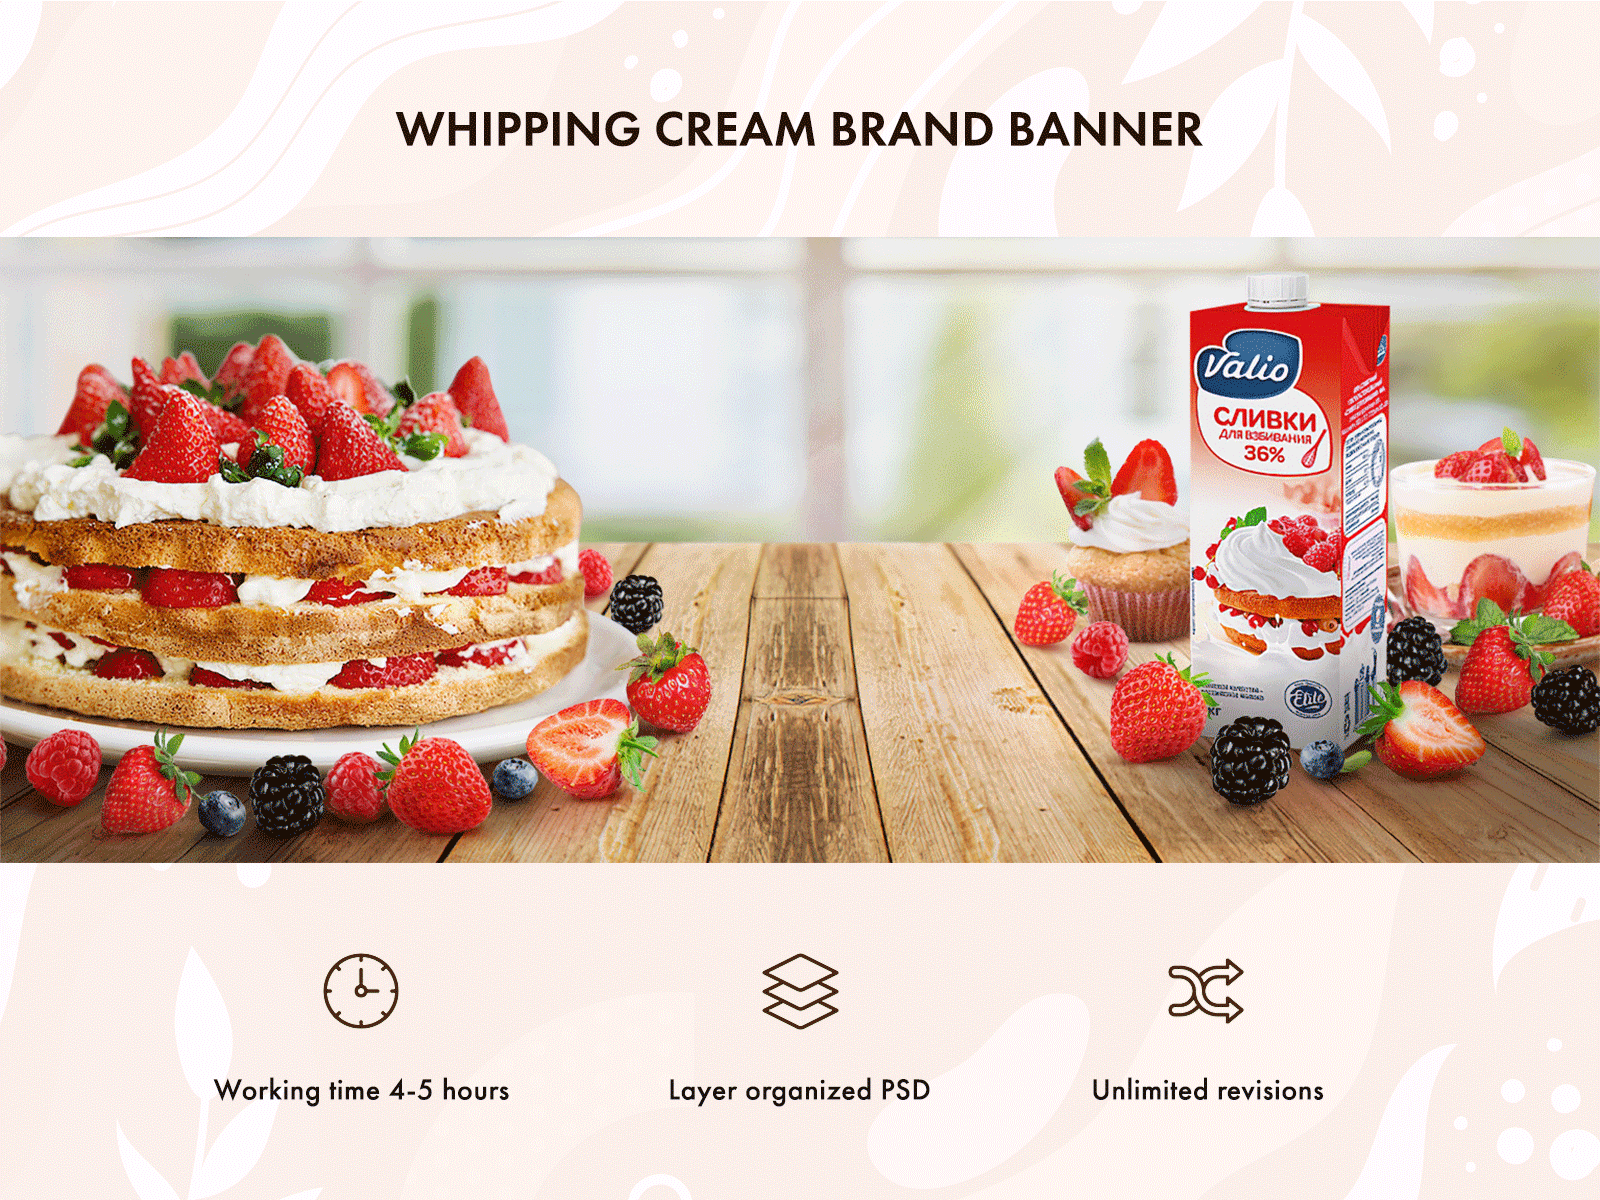 Whipping cream brand banner